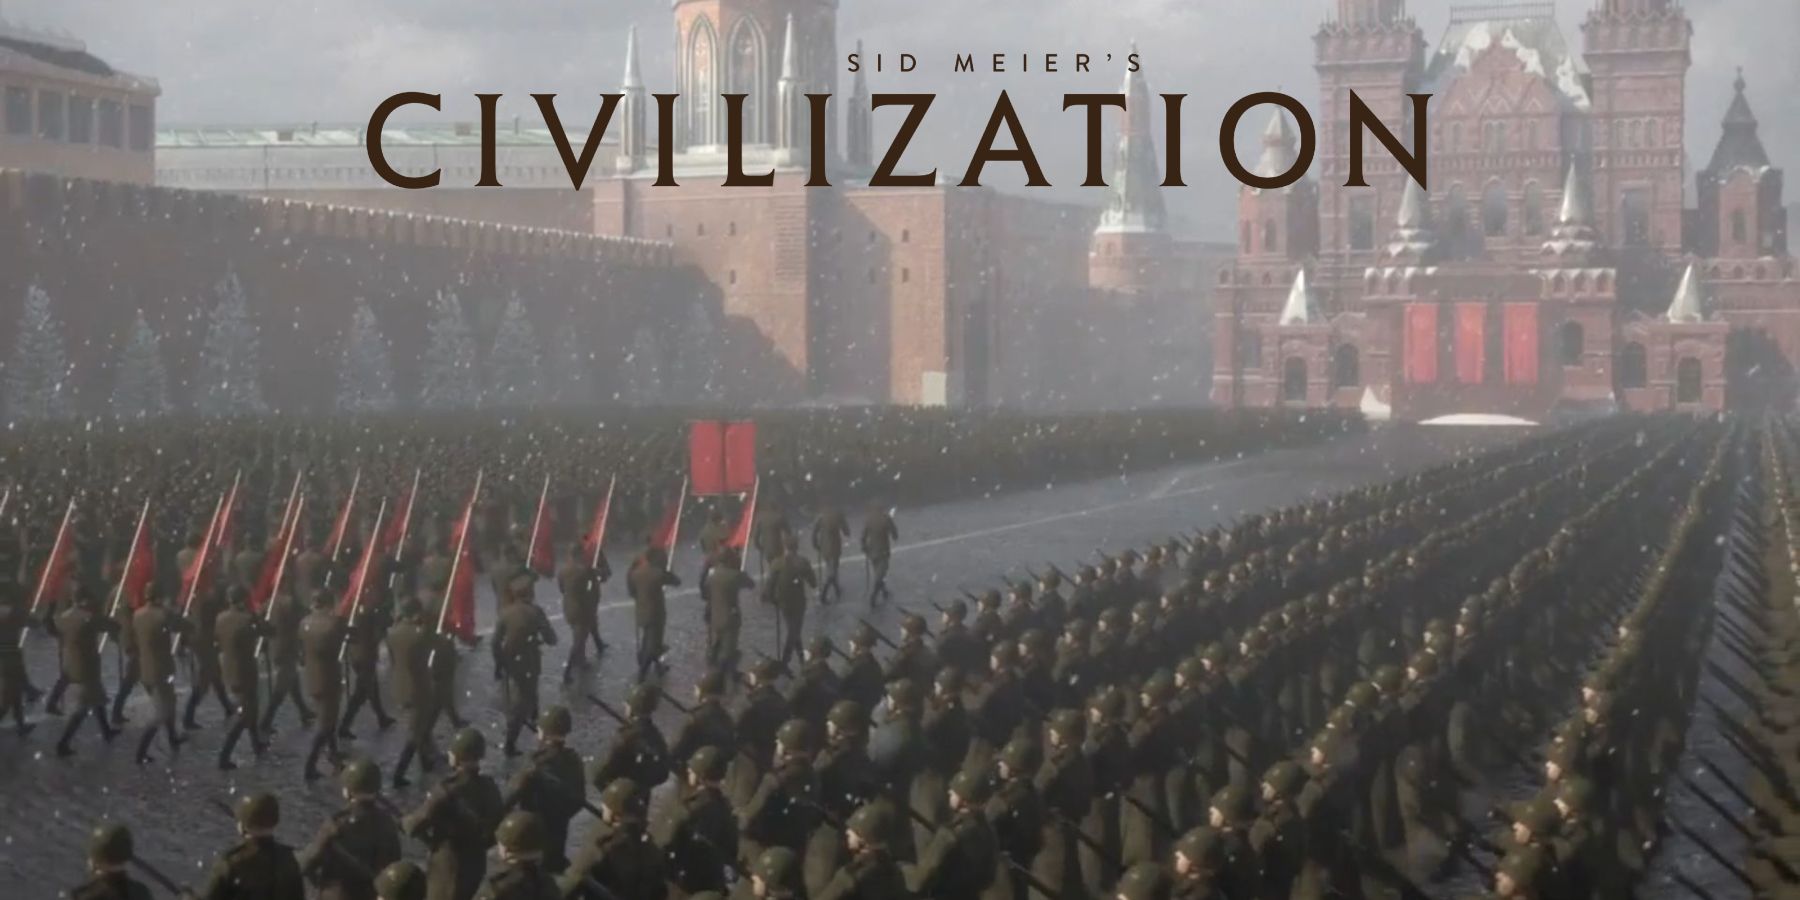 Civilization 5 Military Victory